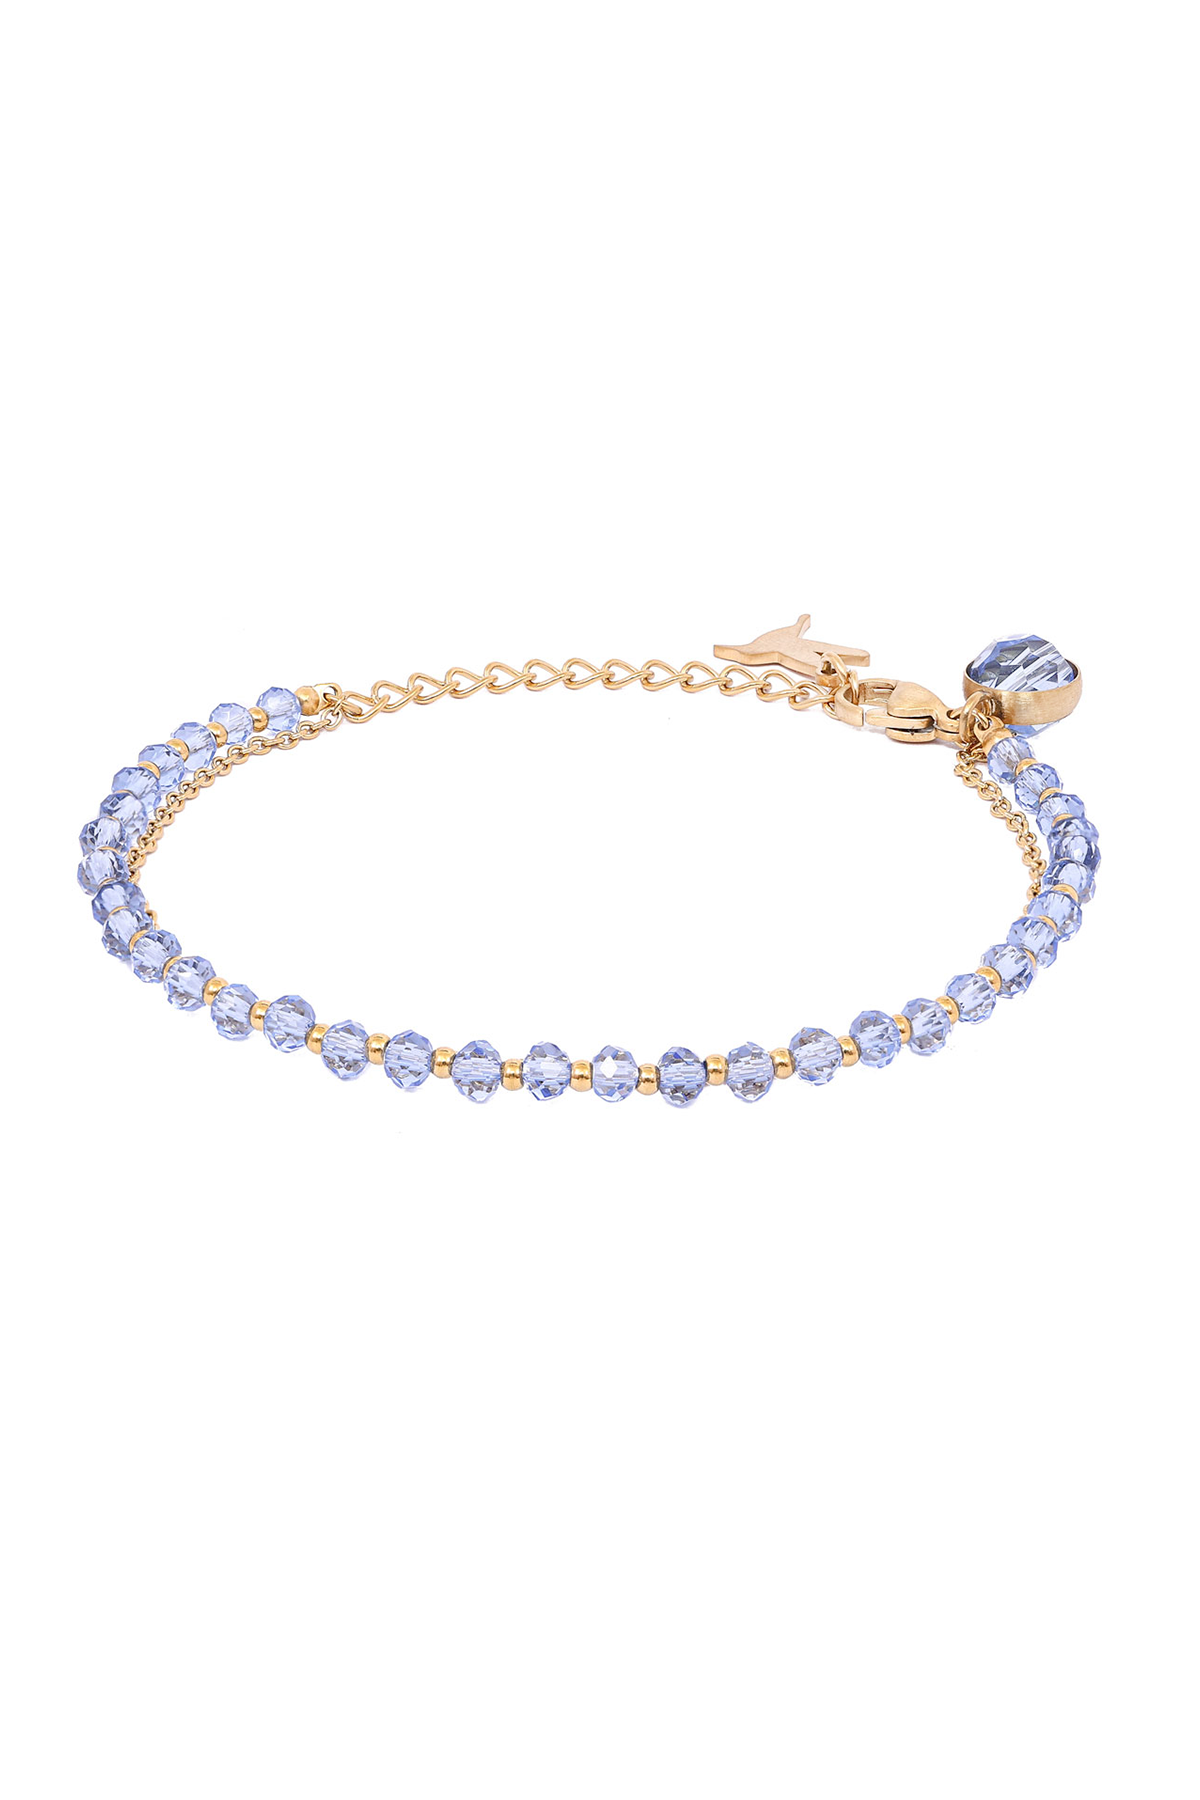 Iben crystal bracelet - Northern sea